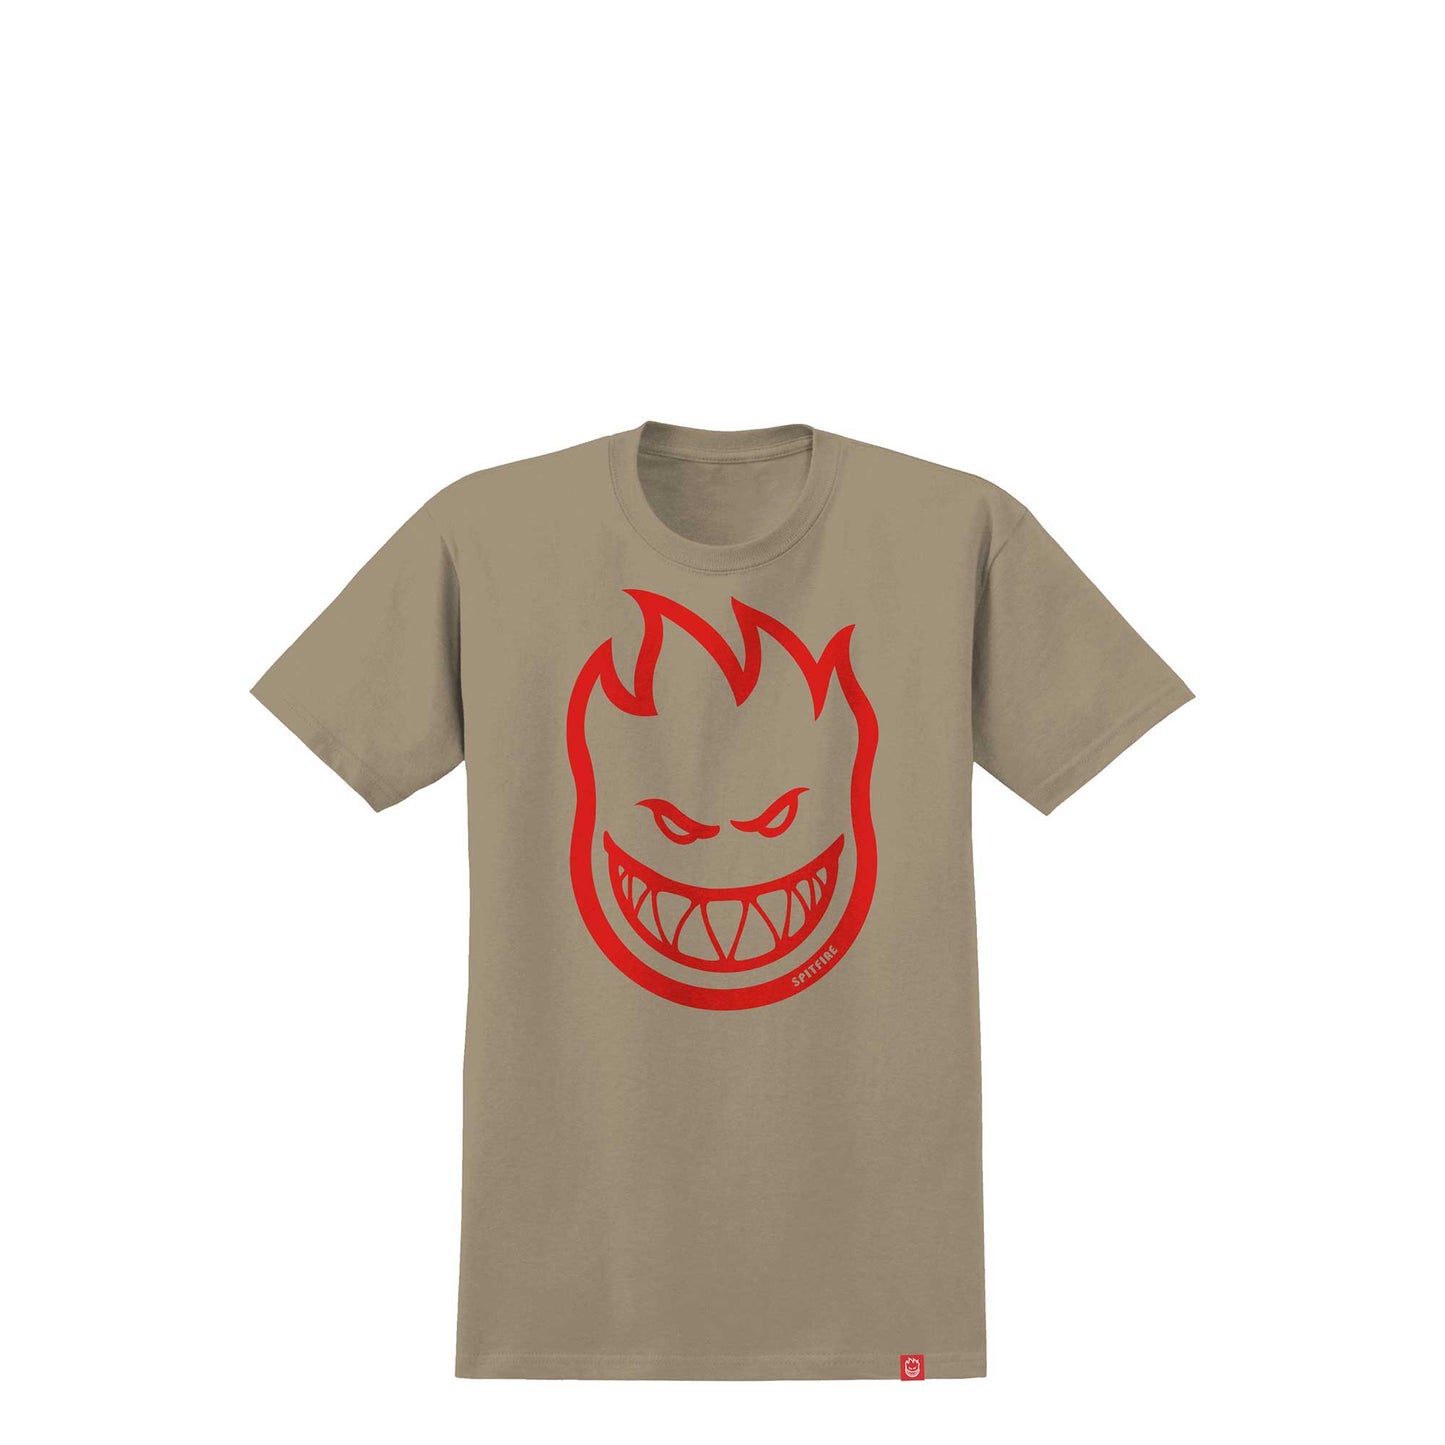 Spitfire Bighead T-Shirt, sand w/ red print - Tiki Room Skateboards - 1